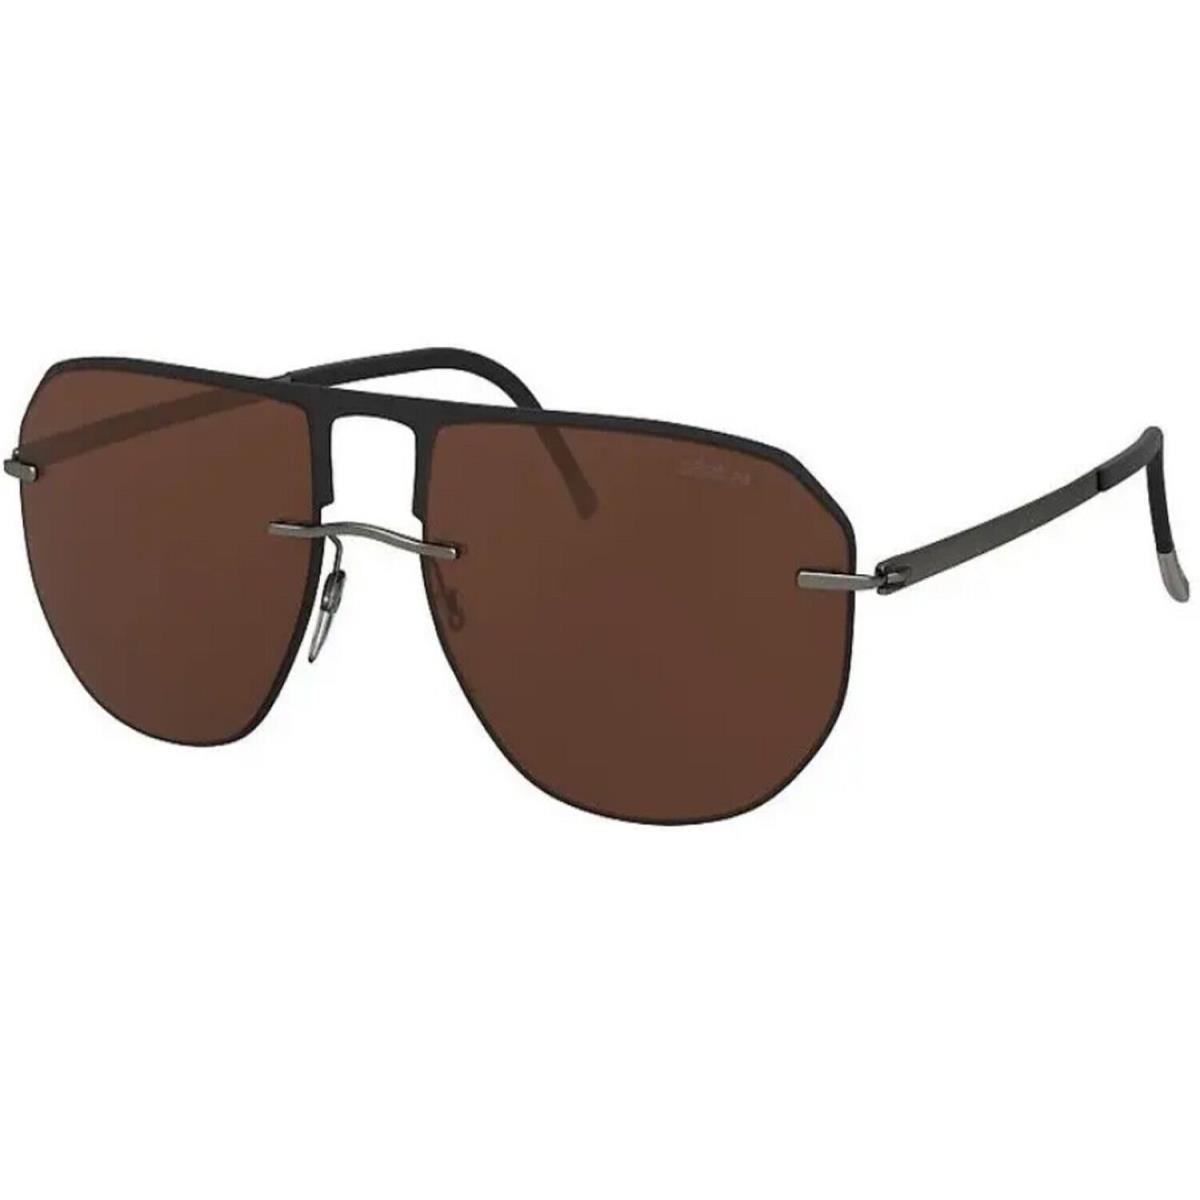 Silhouette Sunglasses Accent Shades 59 17 130 Gunmetal Polarized 8704 75 9040 Silhouette